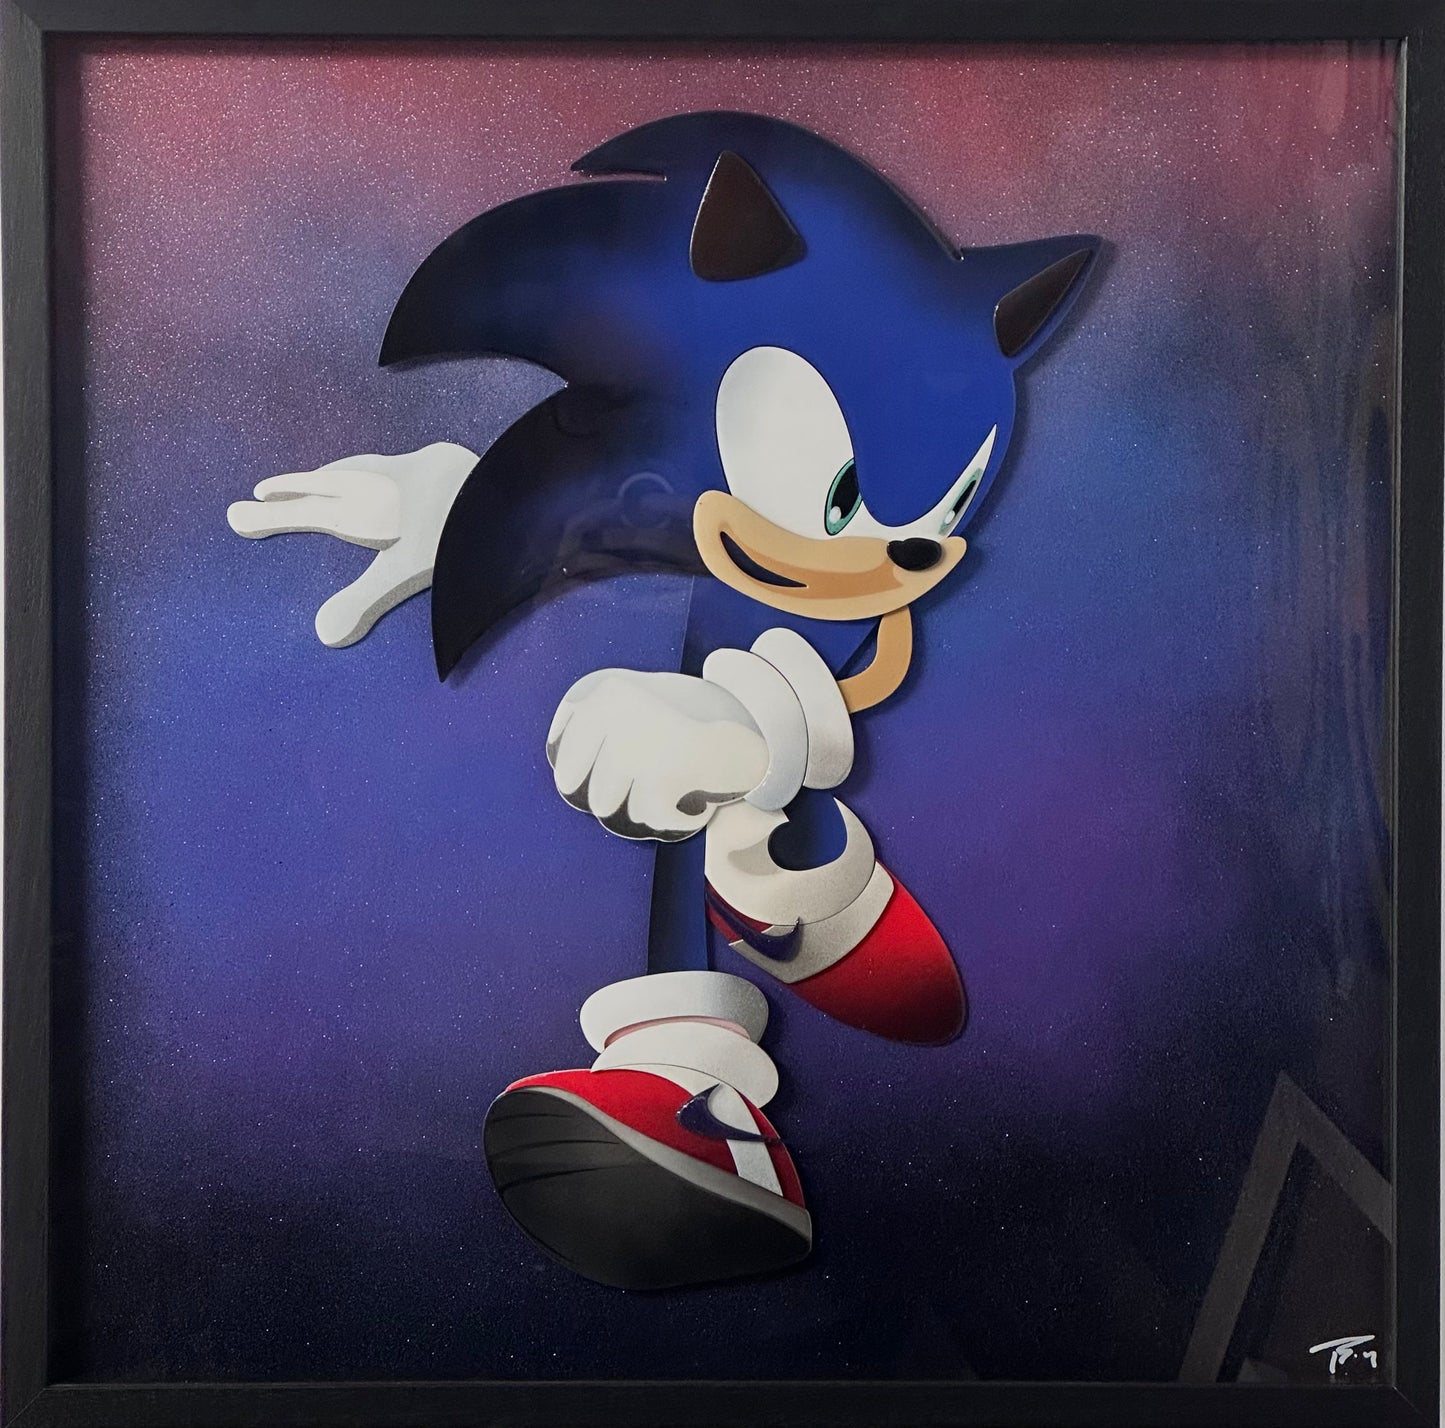 Sonic swoosh 3D glitter edition - Smolensky Gallery